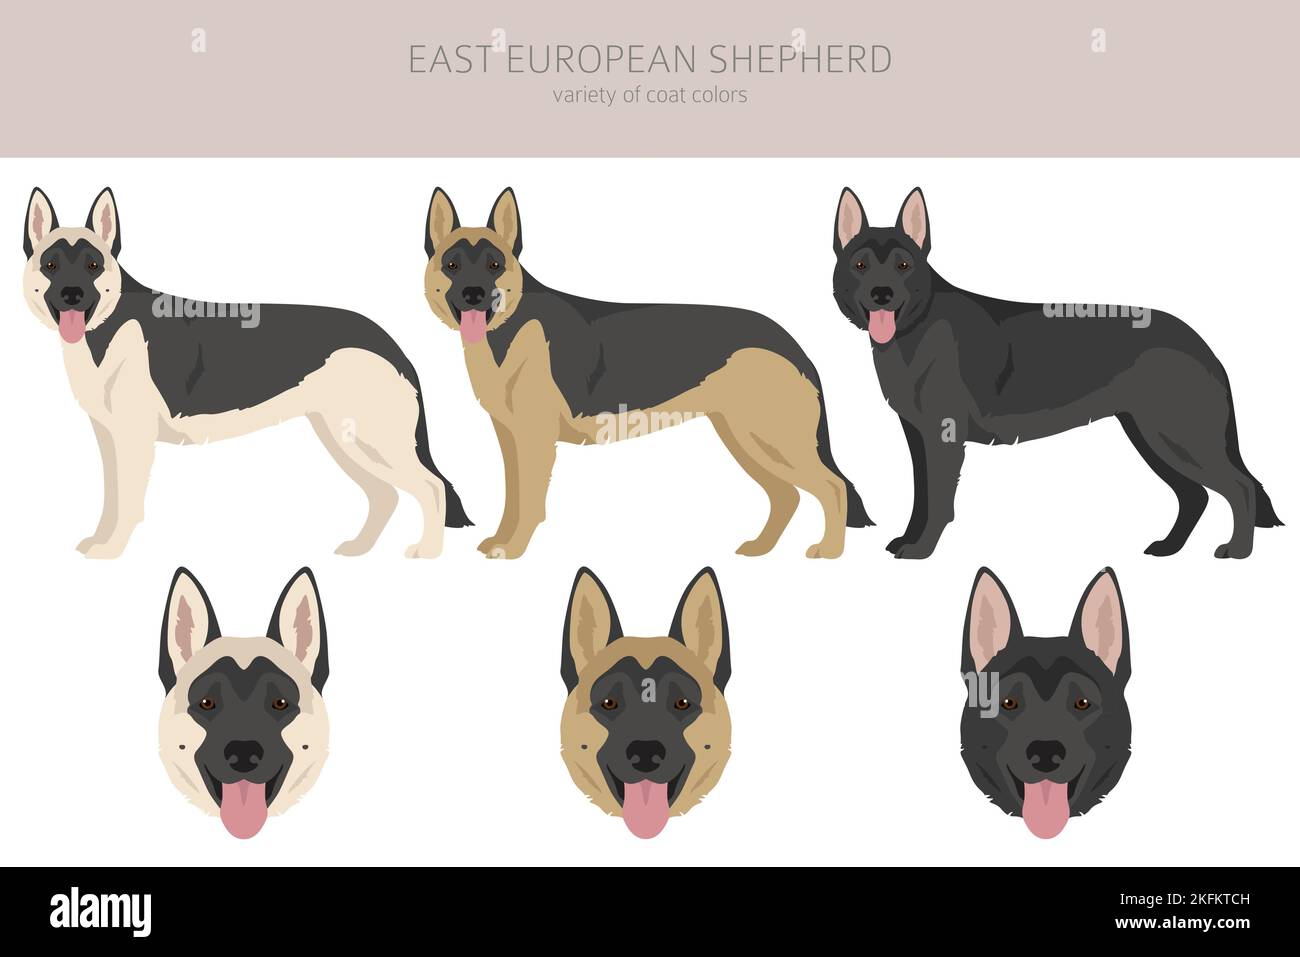 East european shepherd clipart. Different coat colors set.  Vector illustration Stock Vector